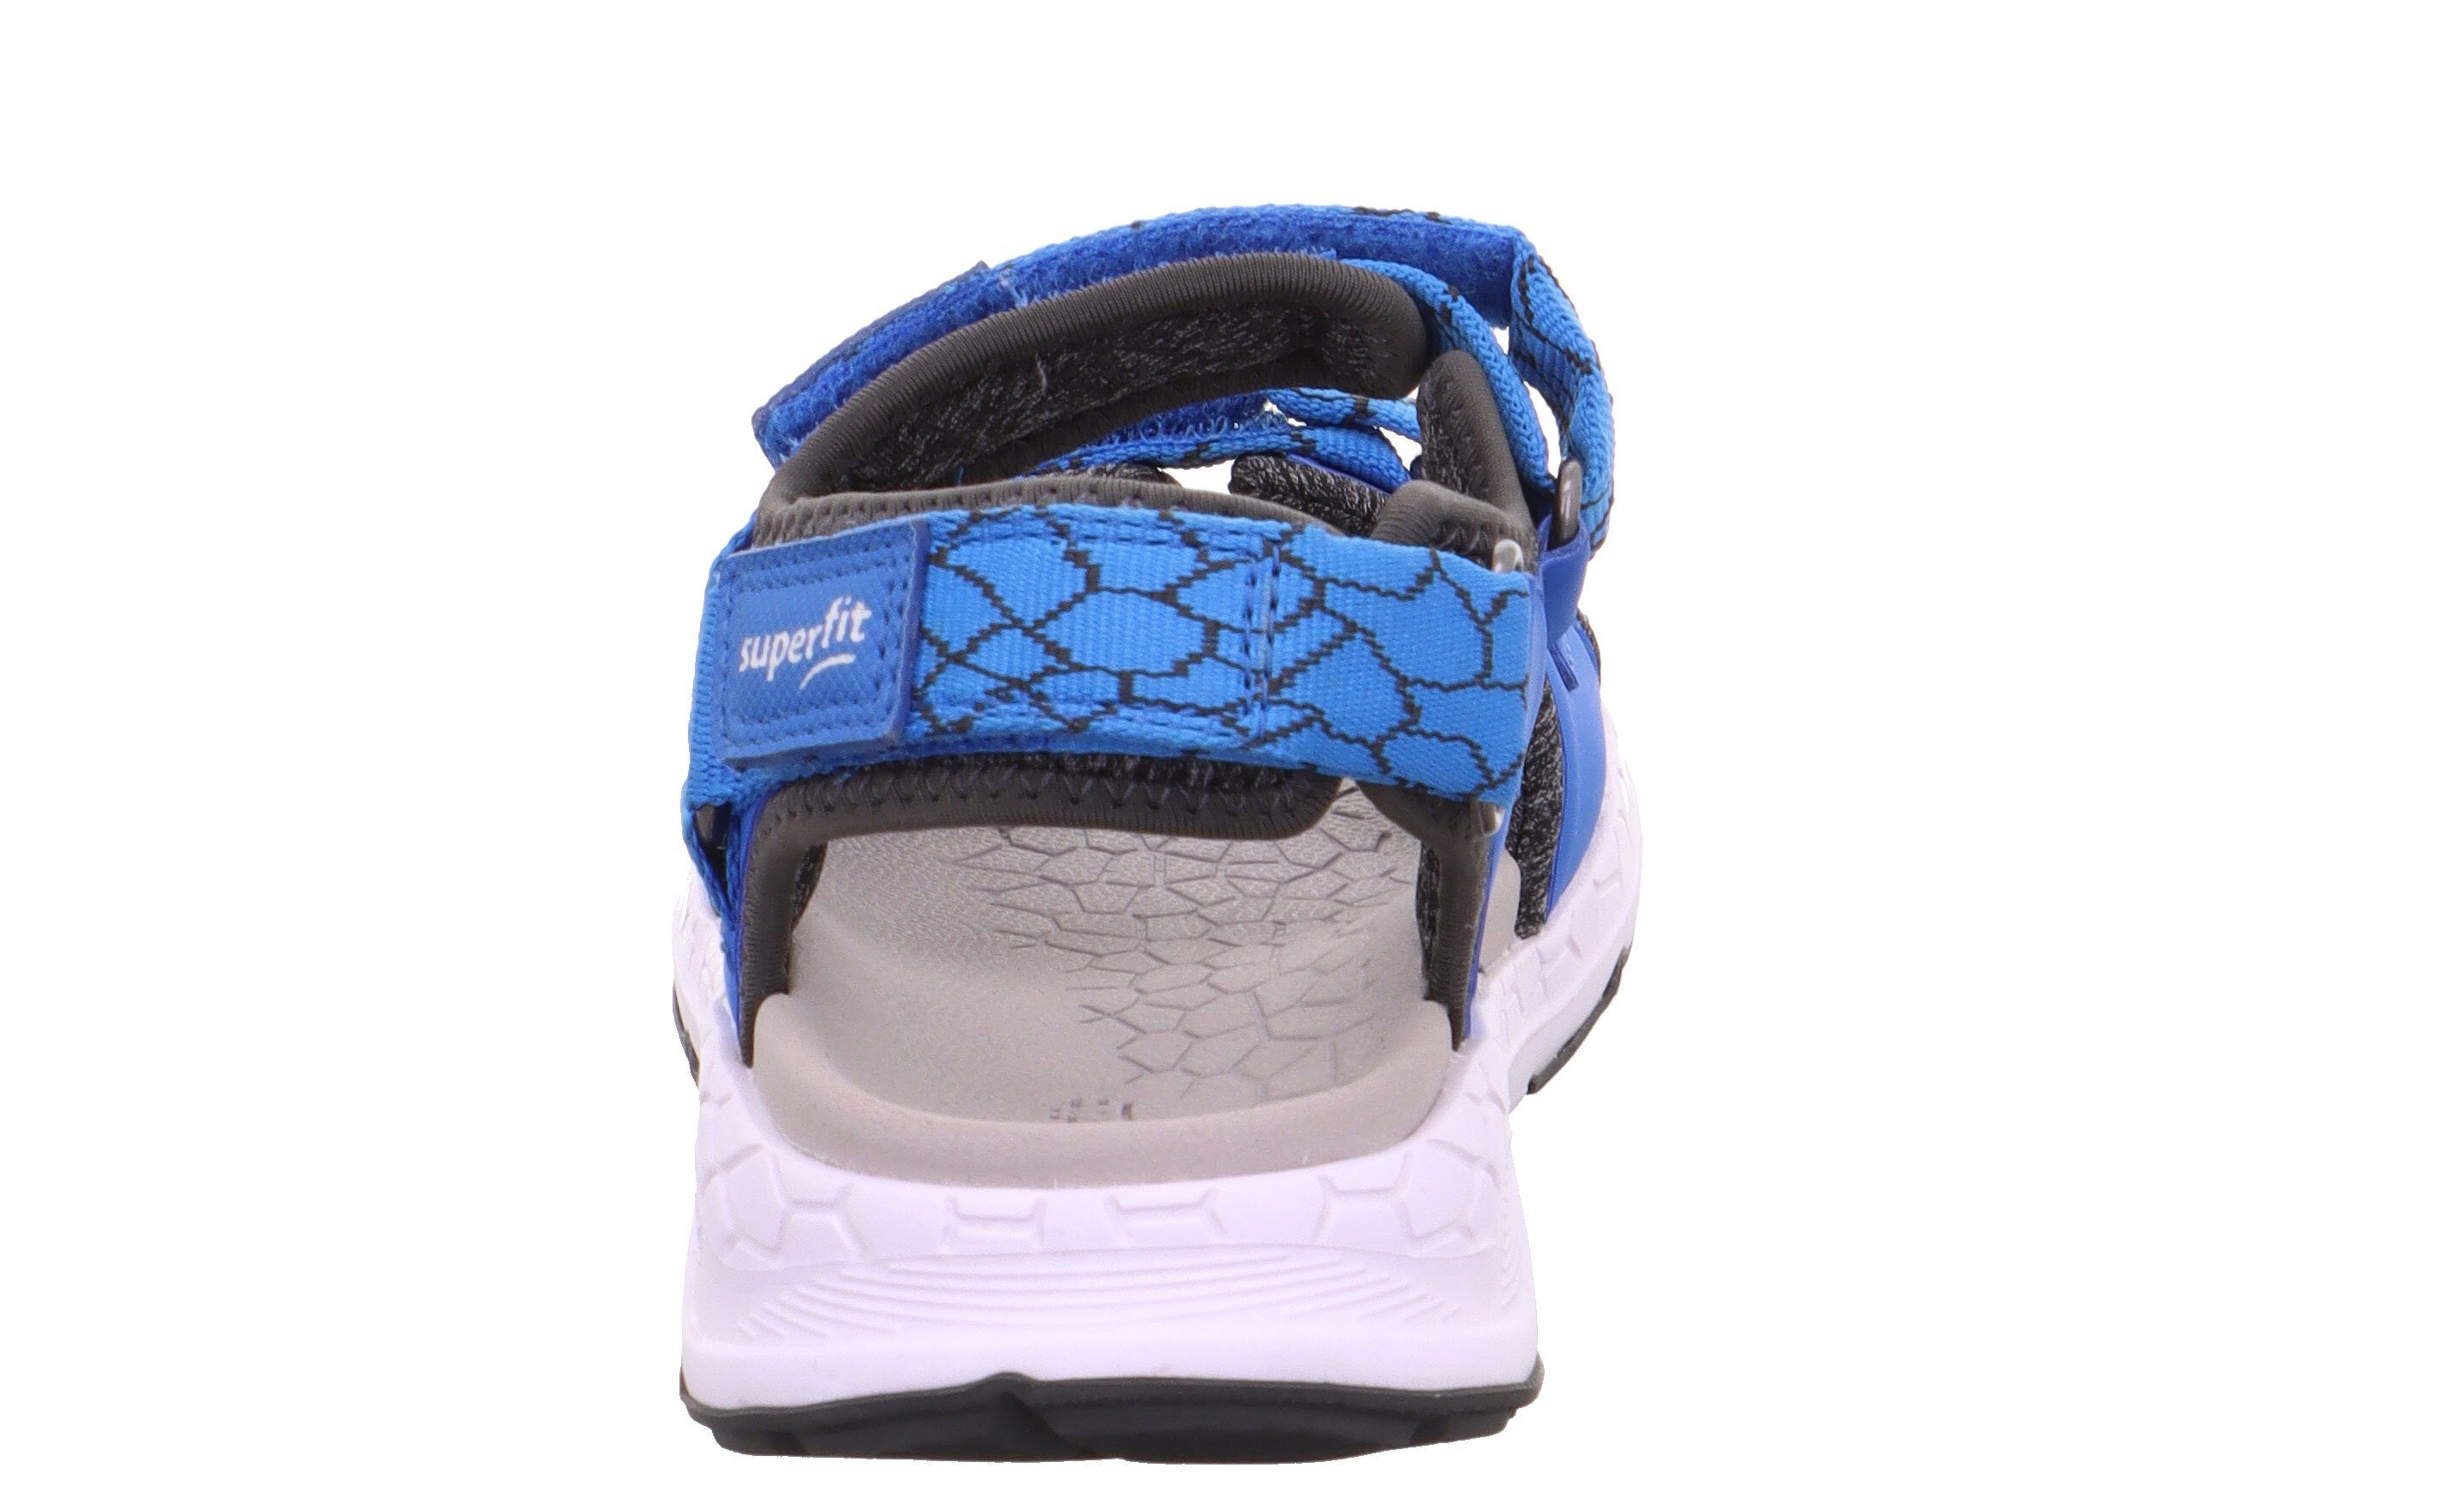 Sandale (20401961) Blau/grau Superfit